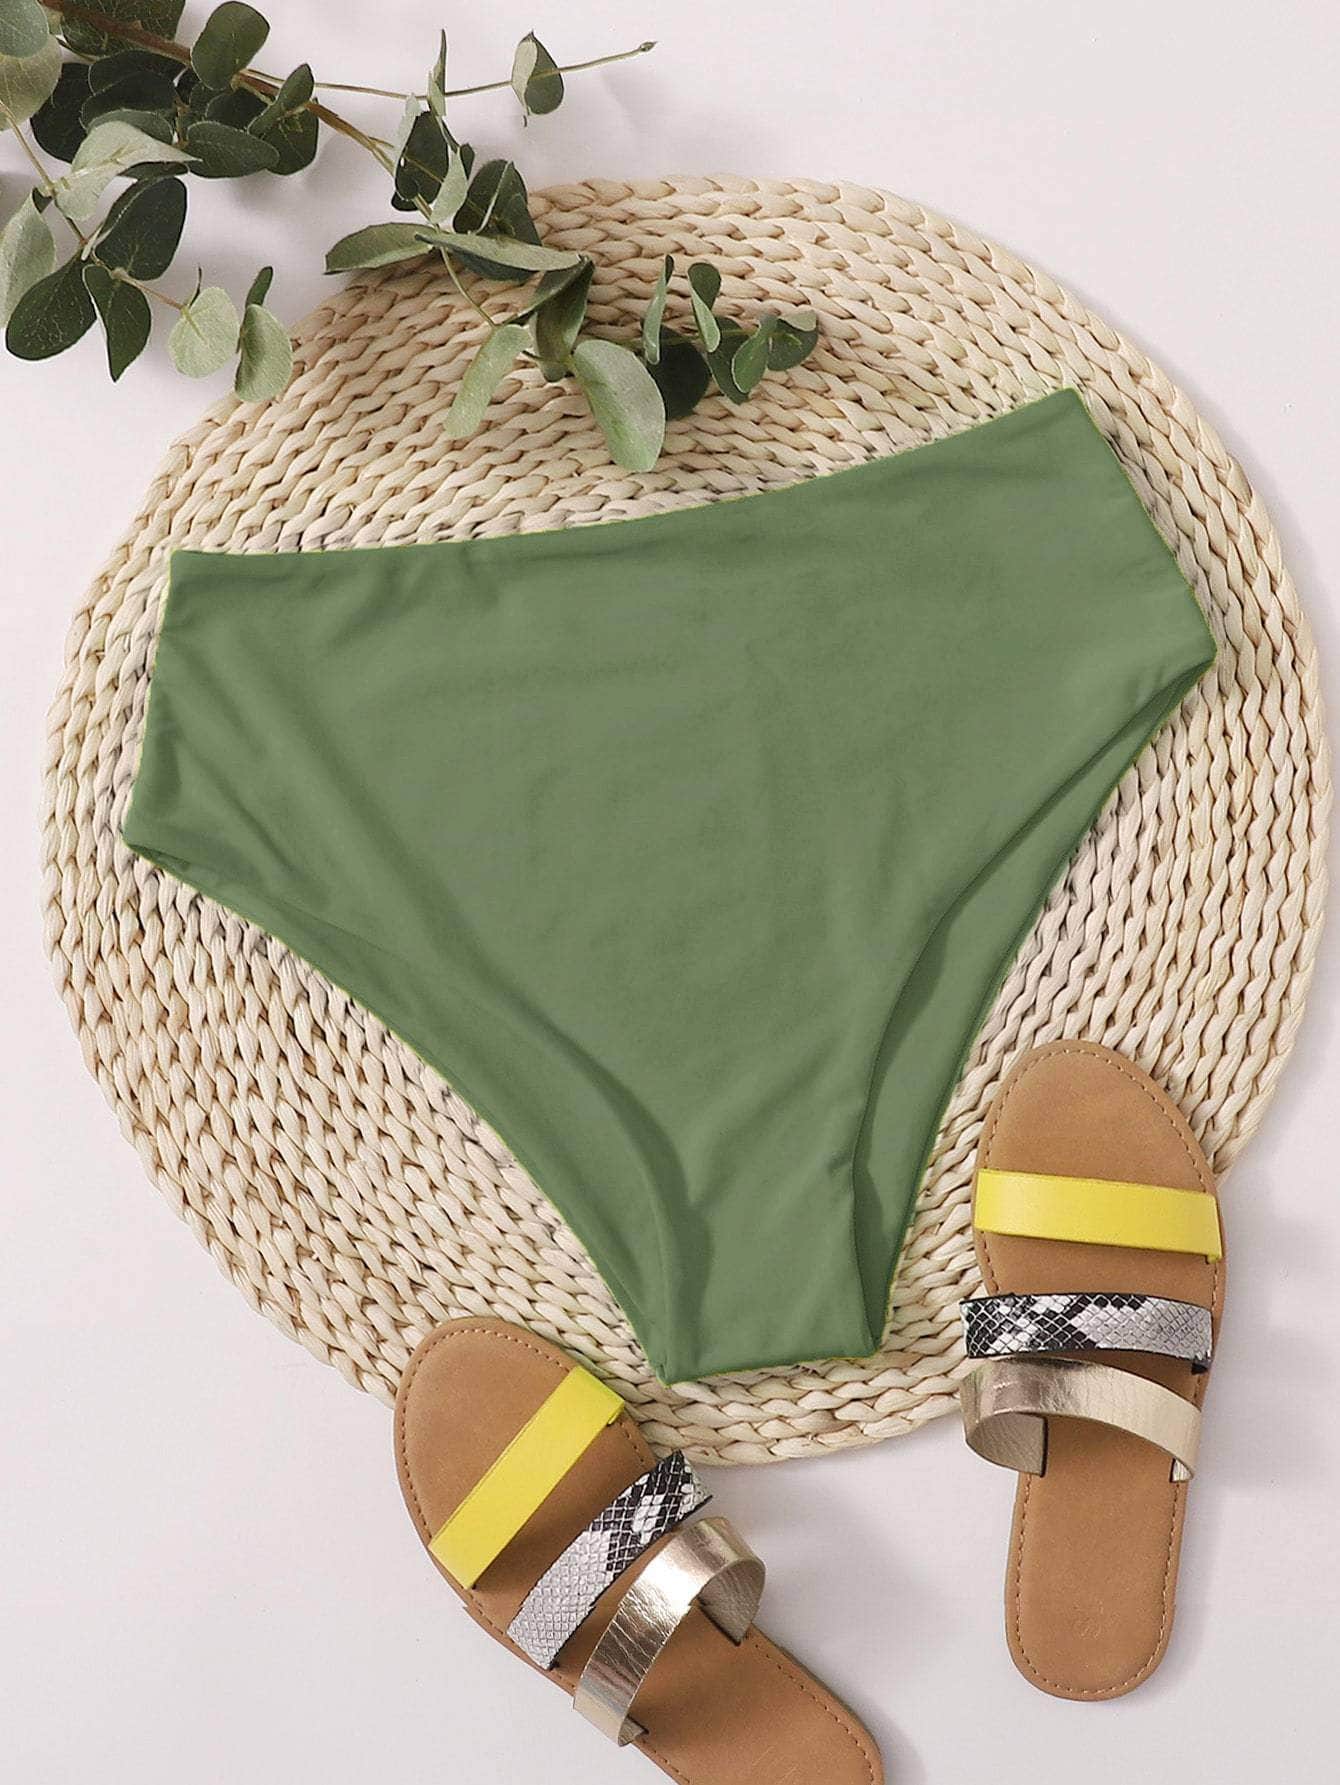 Tangas de bikini liso verde militar sexy